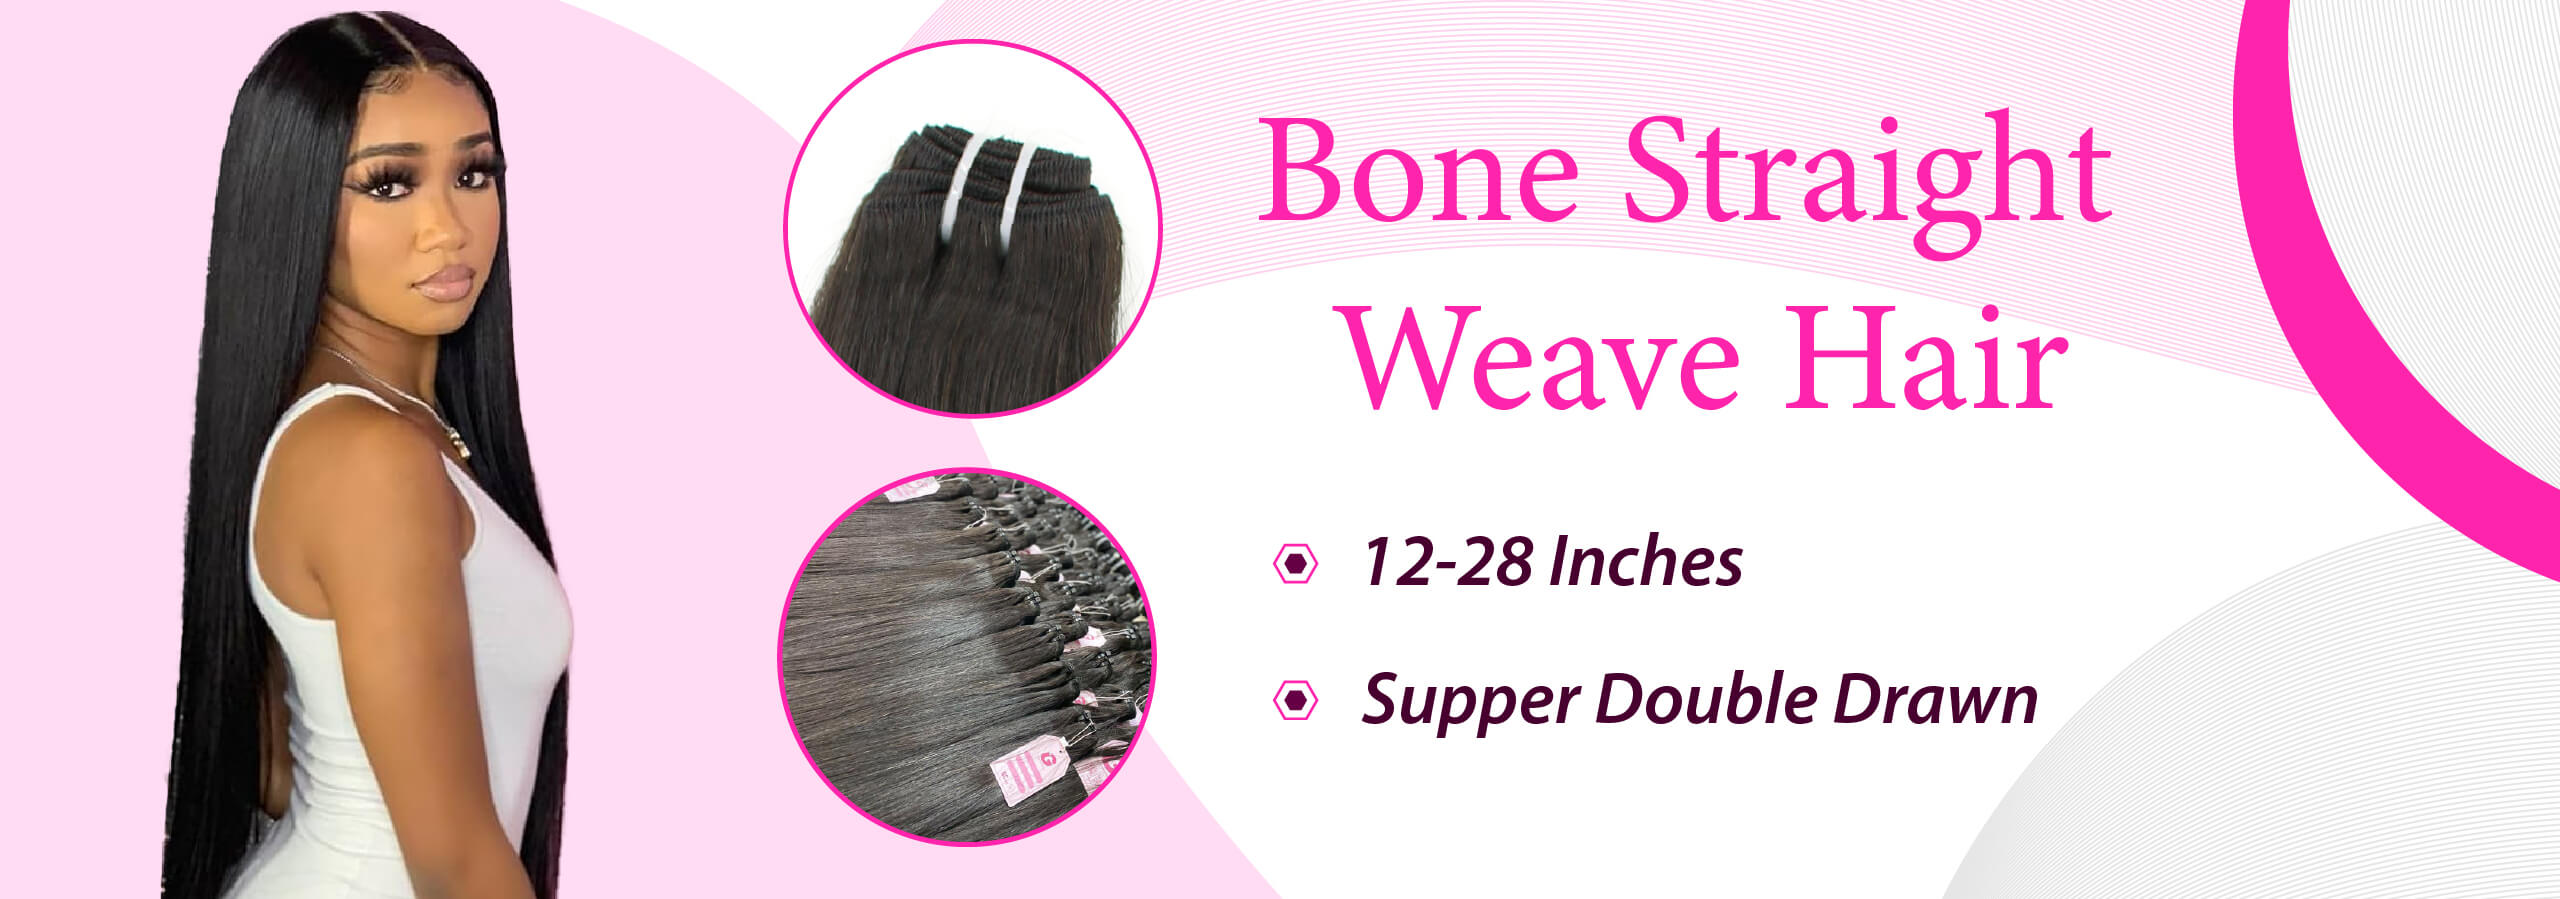 Bone Straight Weave Hair